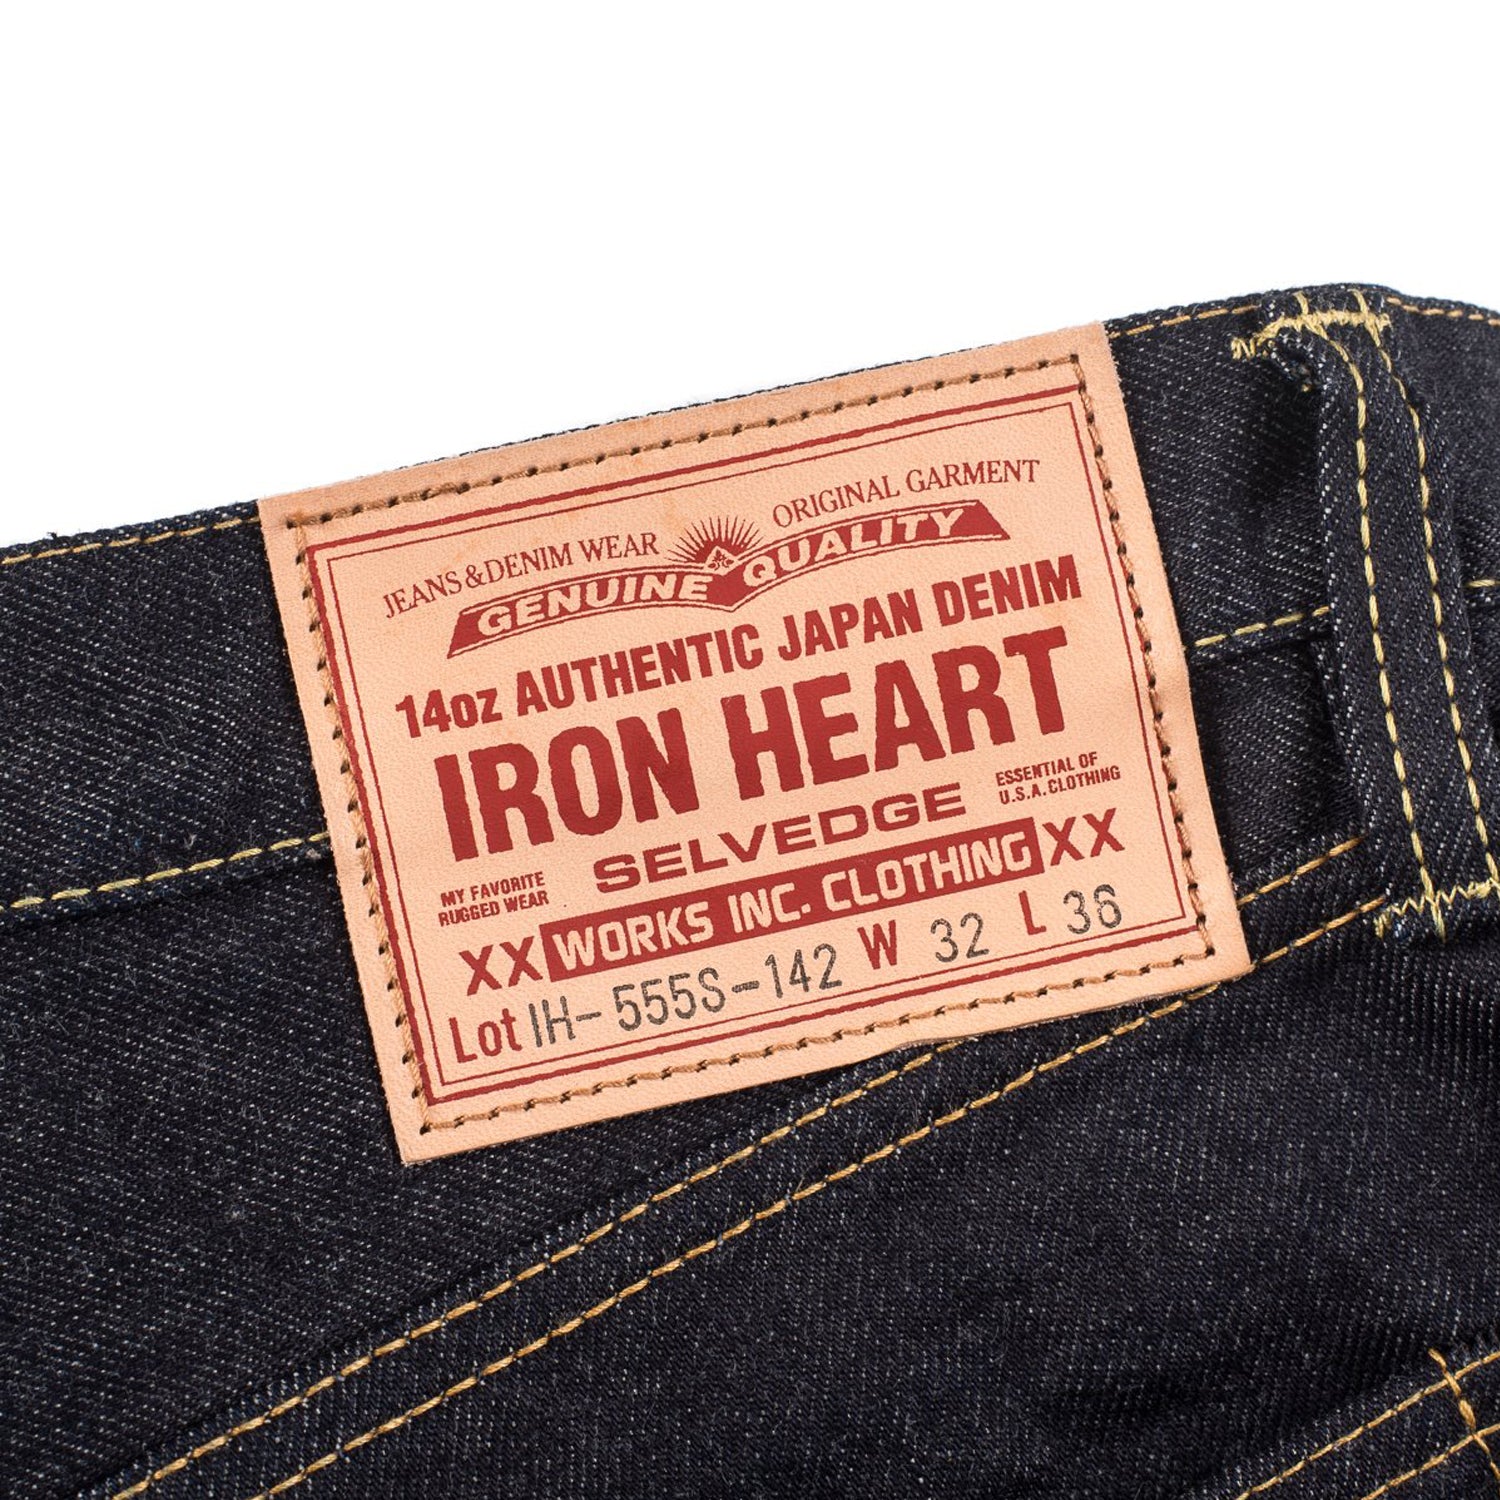 Iron Heart 14oz IH-555S-142 Super Slim Jean Indigo